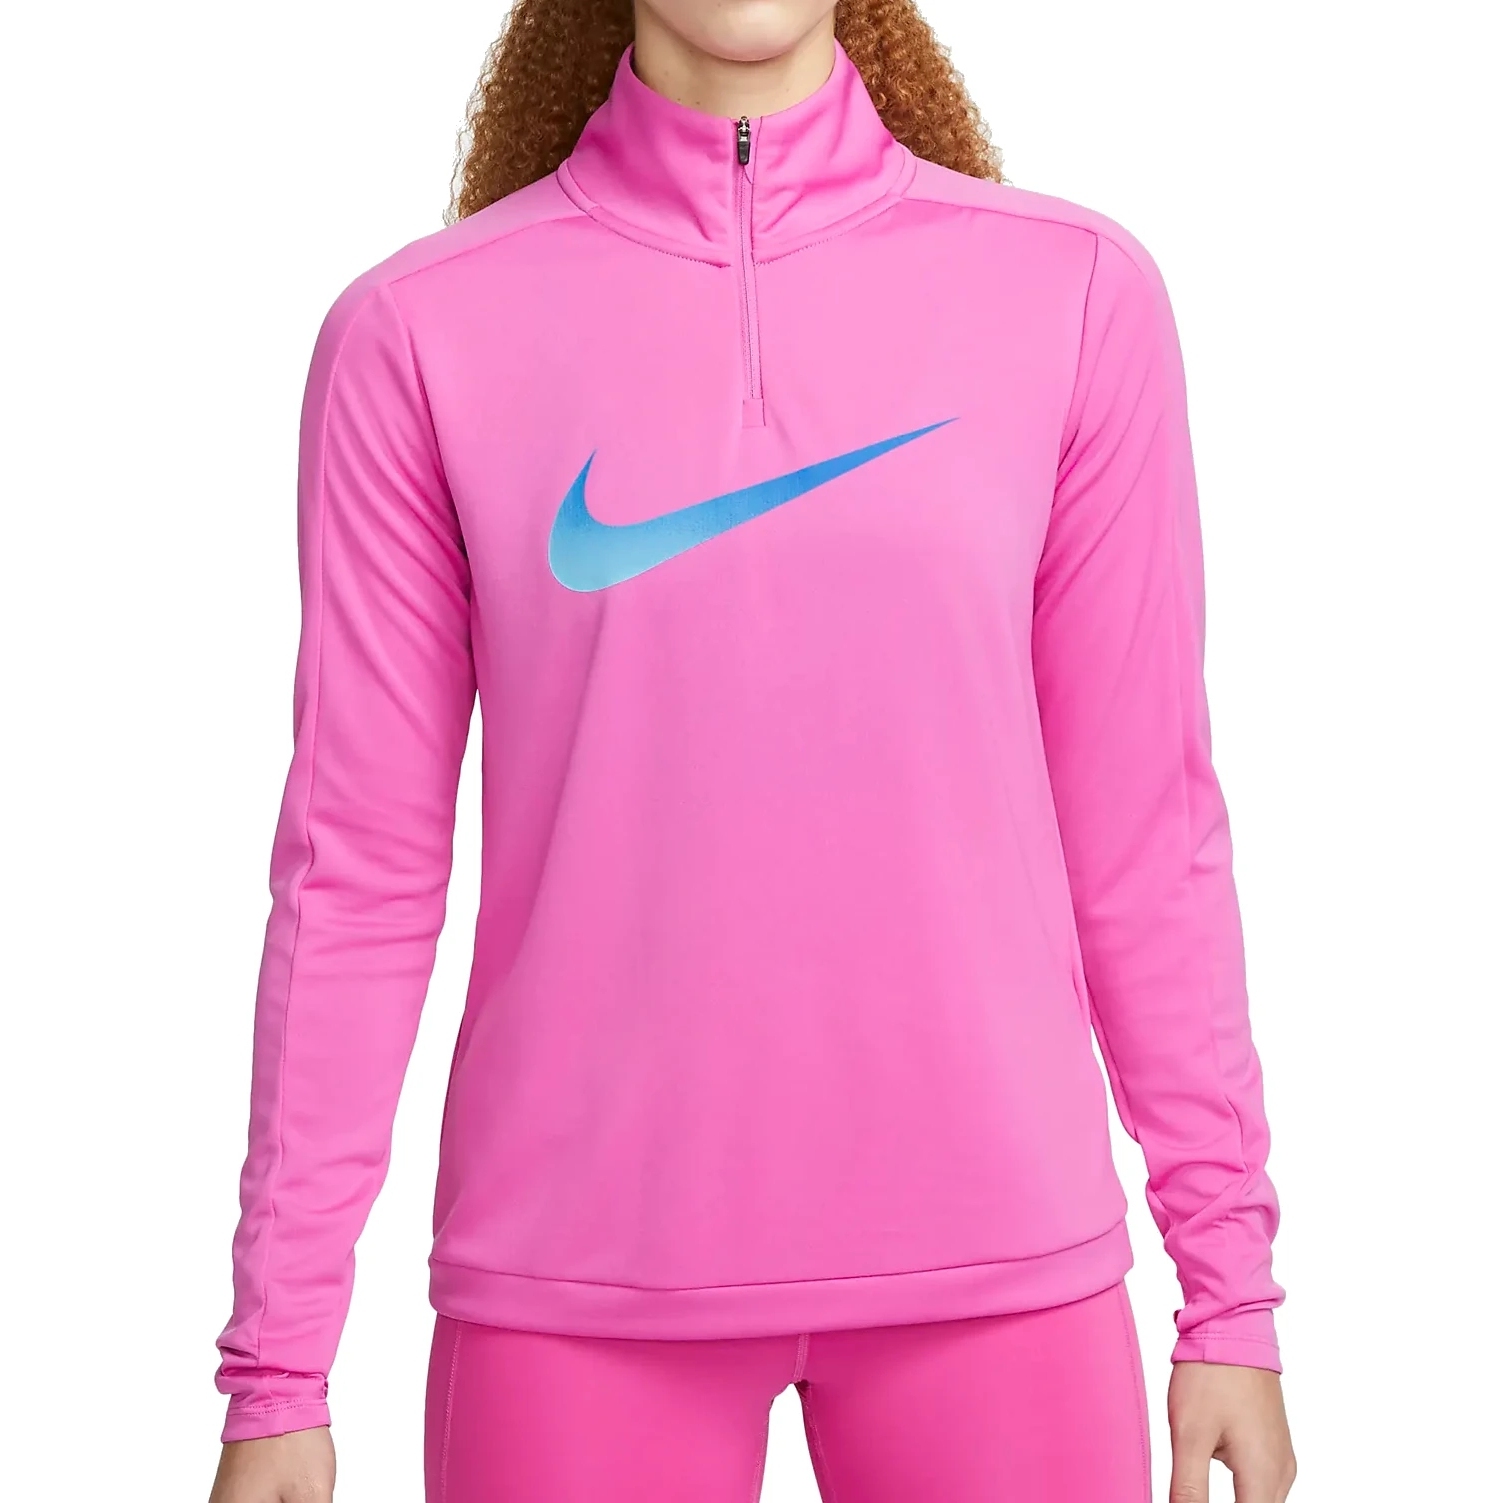 Nike Dri-FIT Sleeve fuchsia/reflective Top Women active Short silver Long - Zip DX0952-623 Swoosh